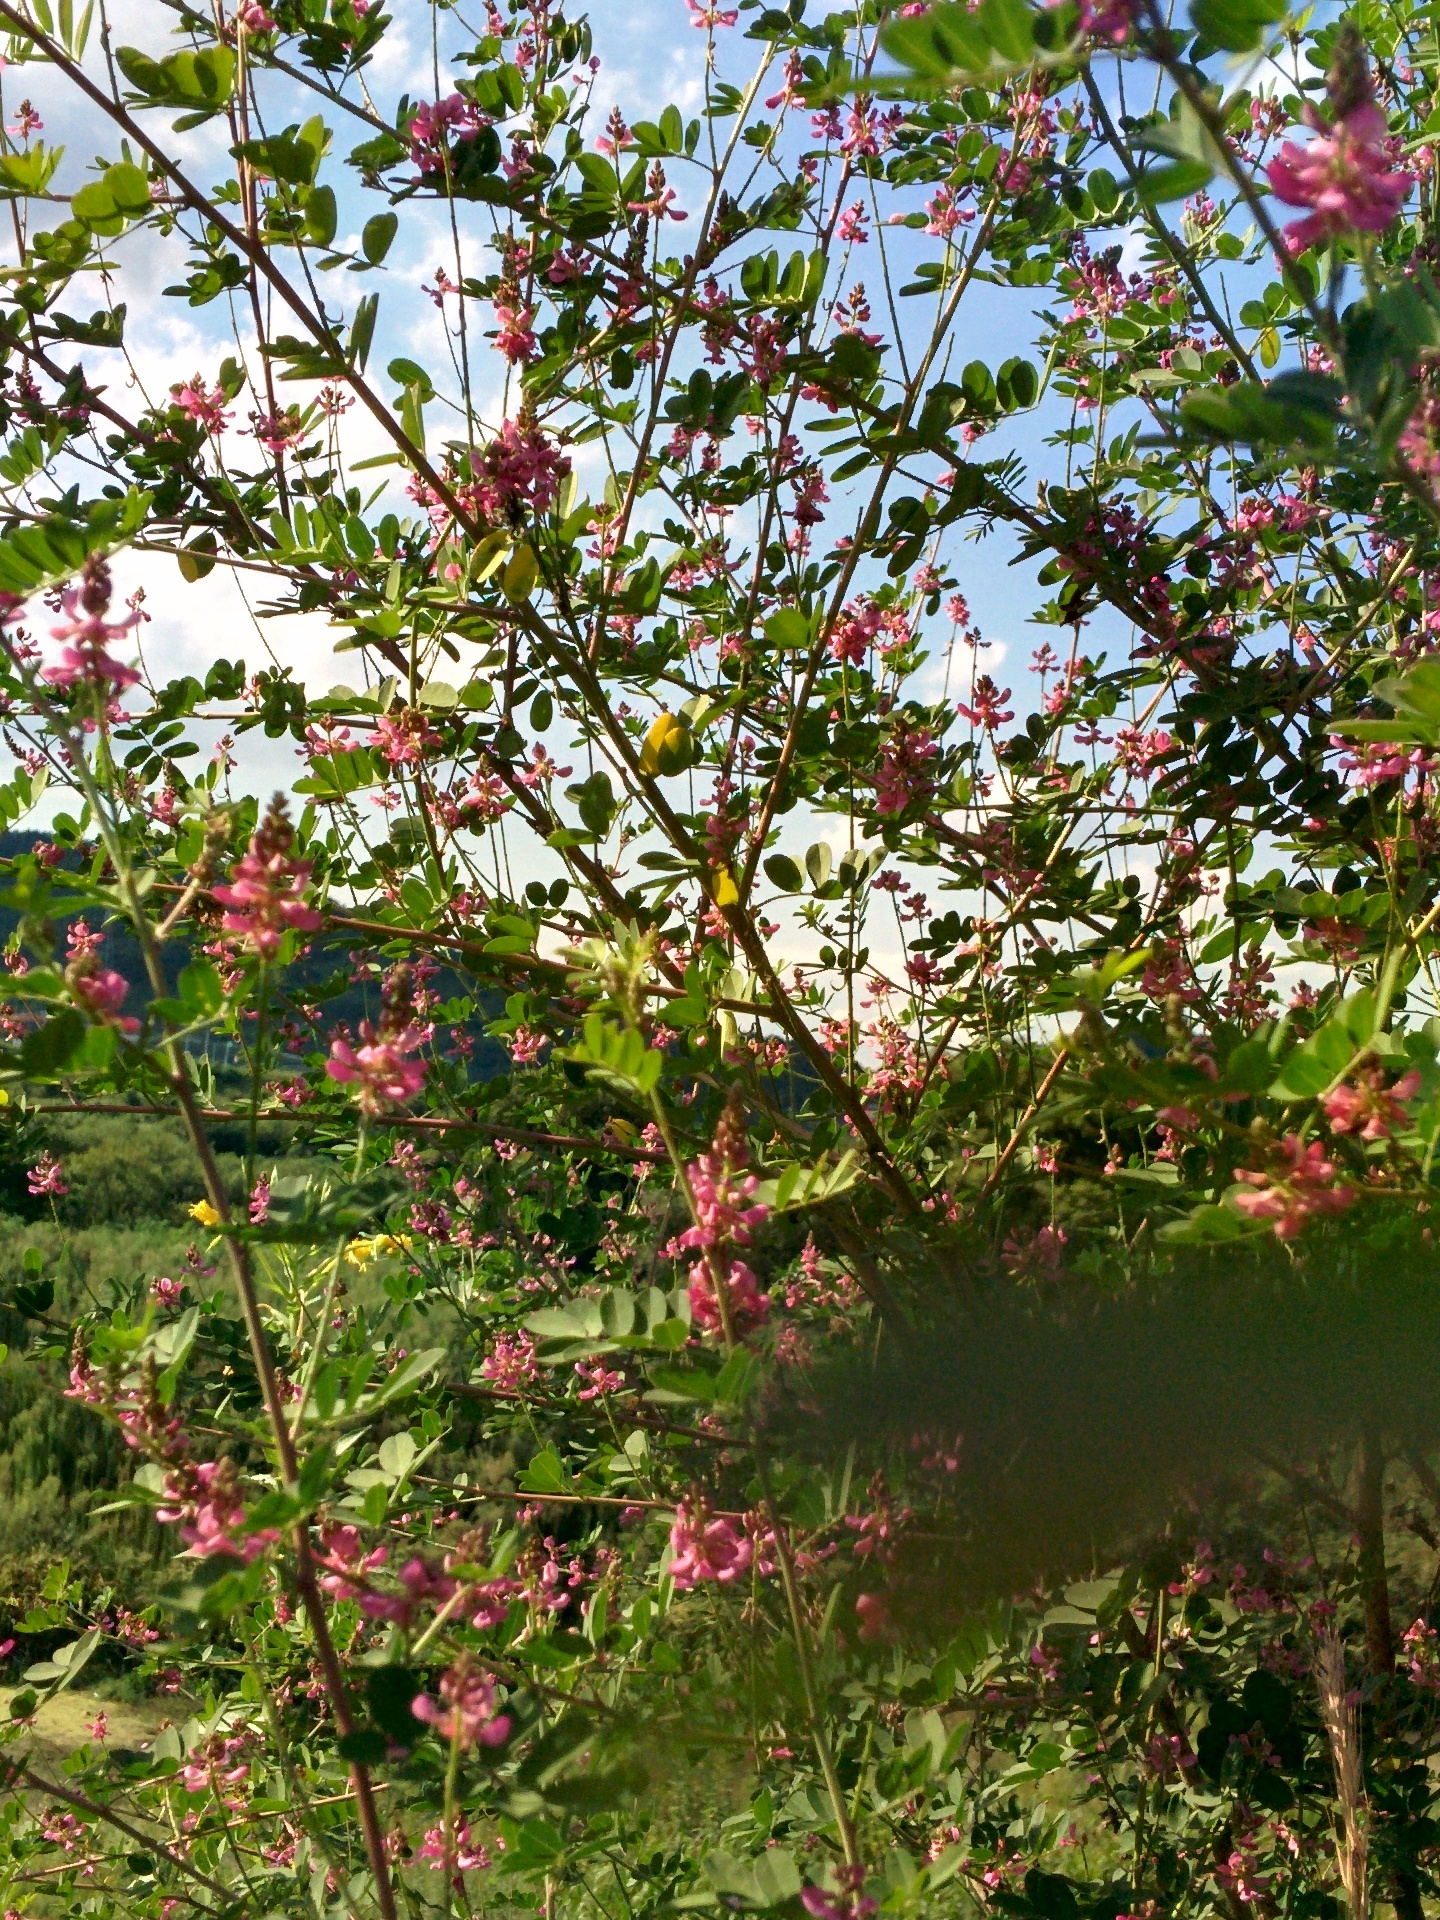 IMG_20150826_160840.jpg 분홍색 싸리나무 꽃... 싸리꽃